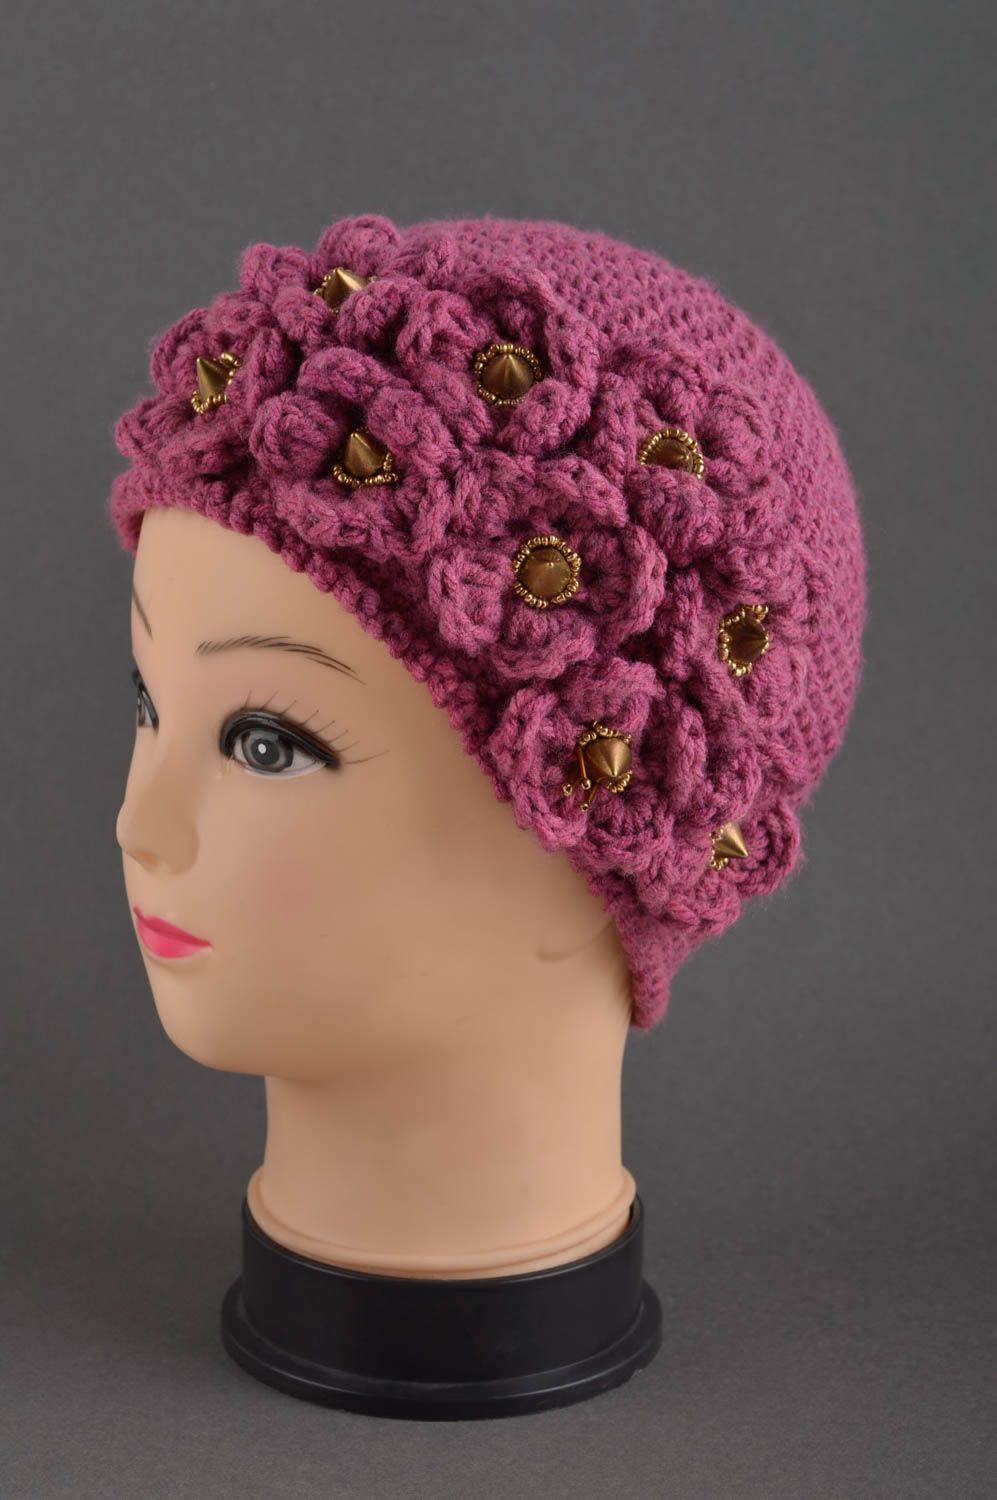 Handmade ladies hat designer accessories winter hats for women gifts for girls photo 1